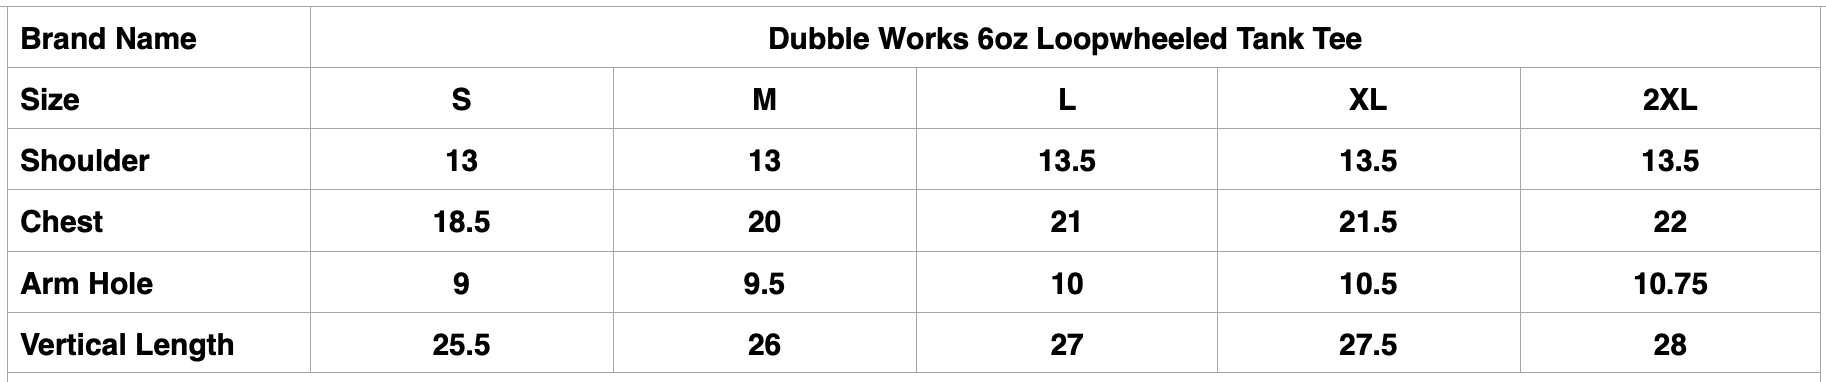 Dubble Works 6oz Loopwheeled Tank Tee (Red)